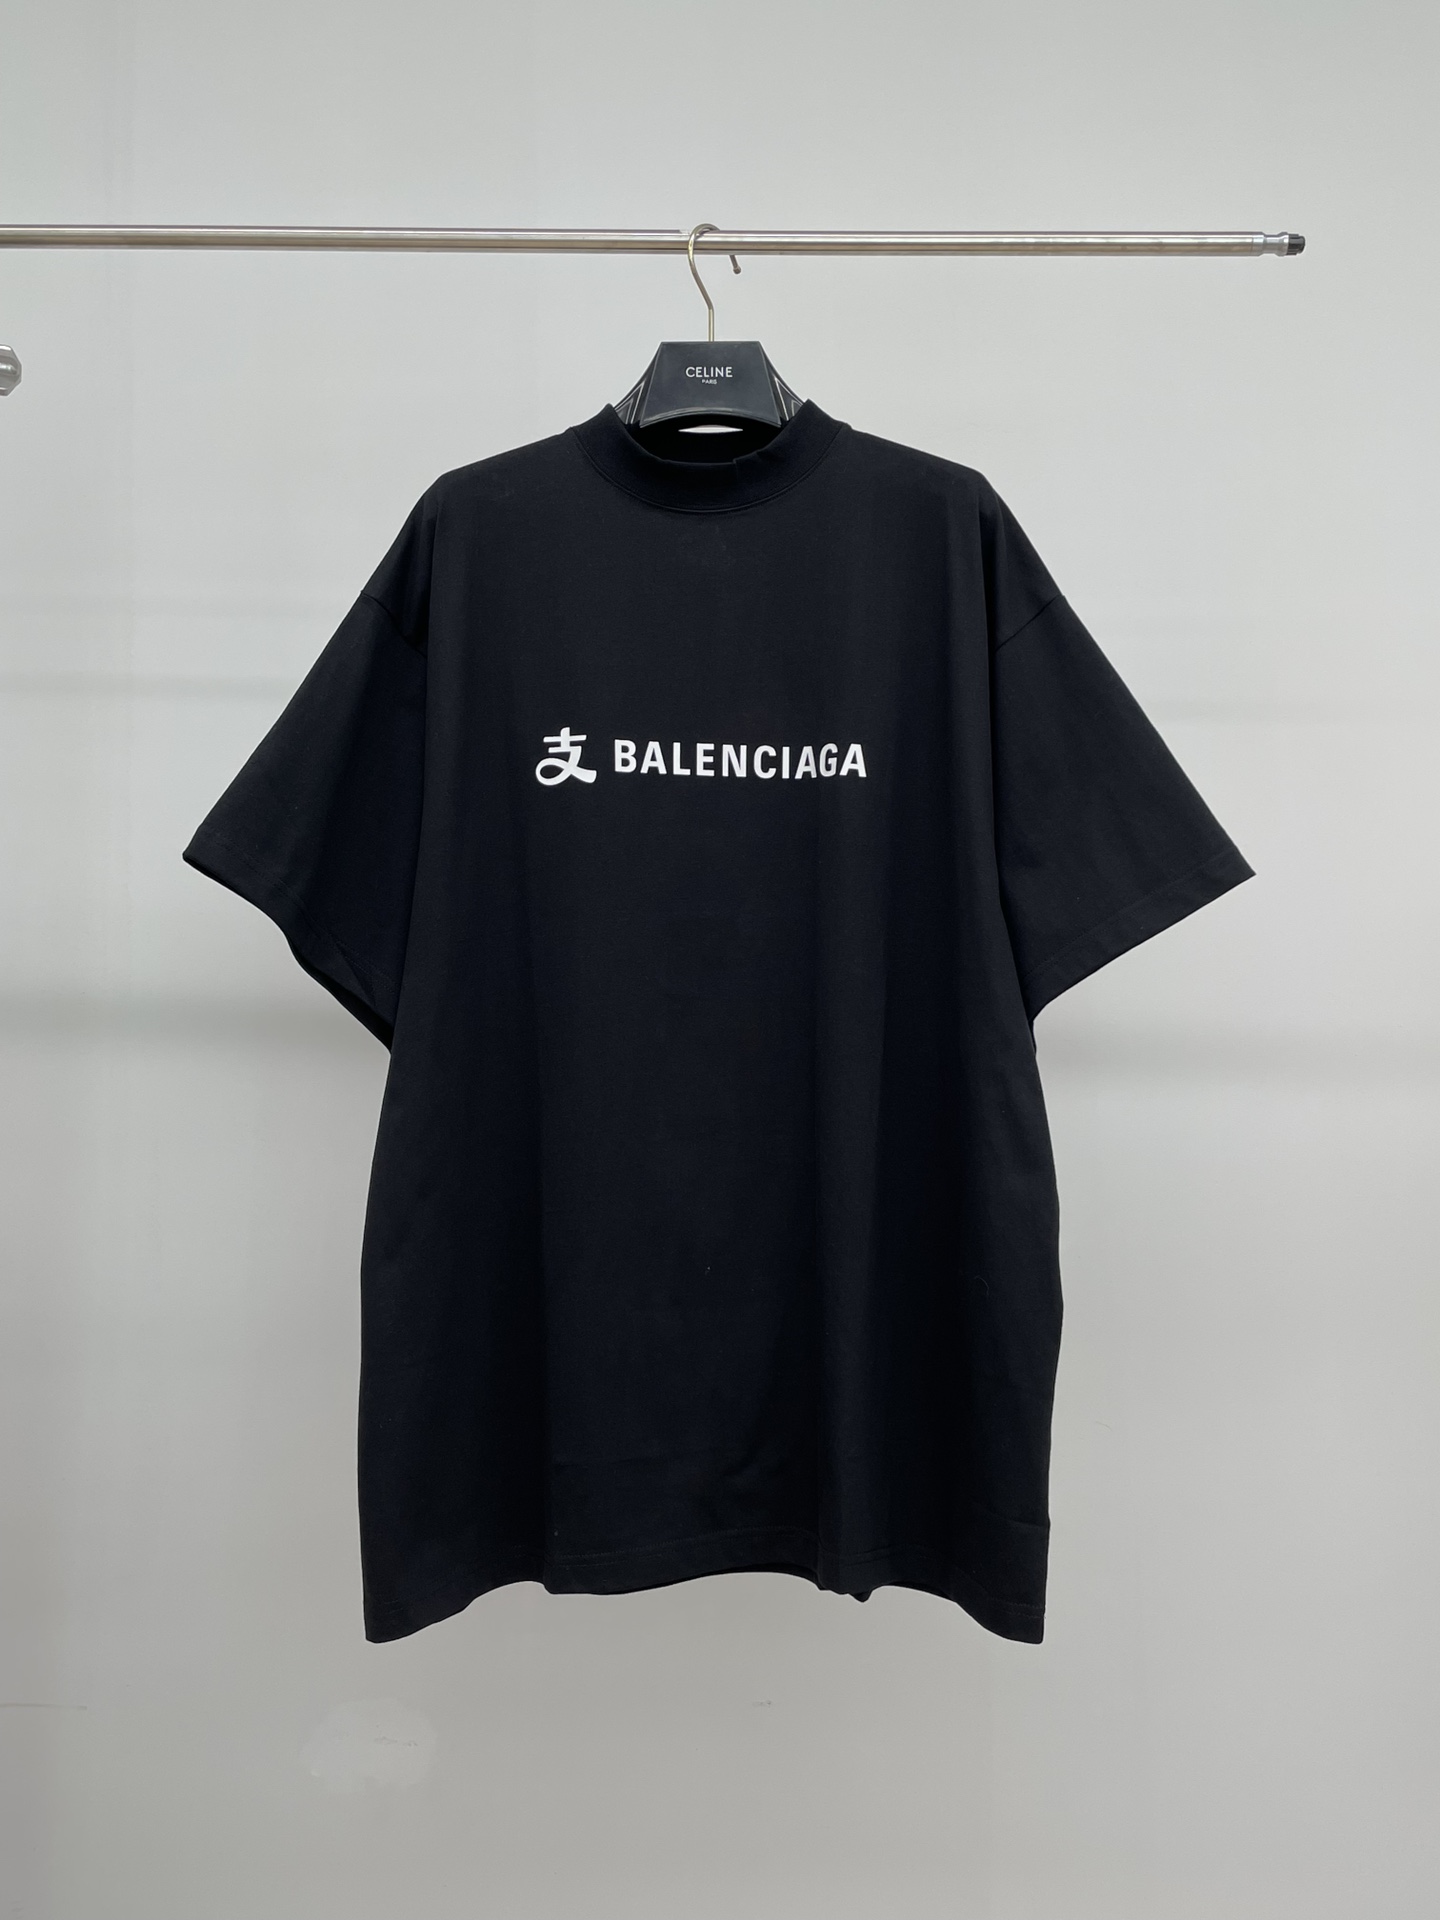 Balenciaga Ropa Camiseta Universal para hombres y mujeres Manga corta